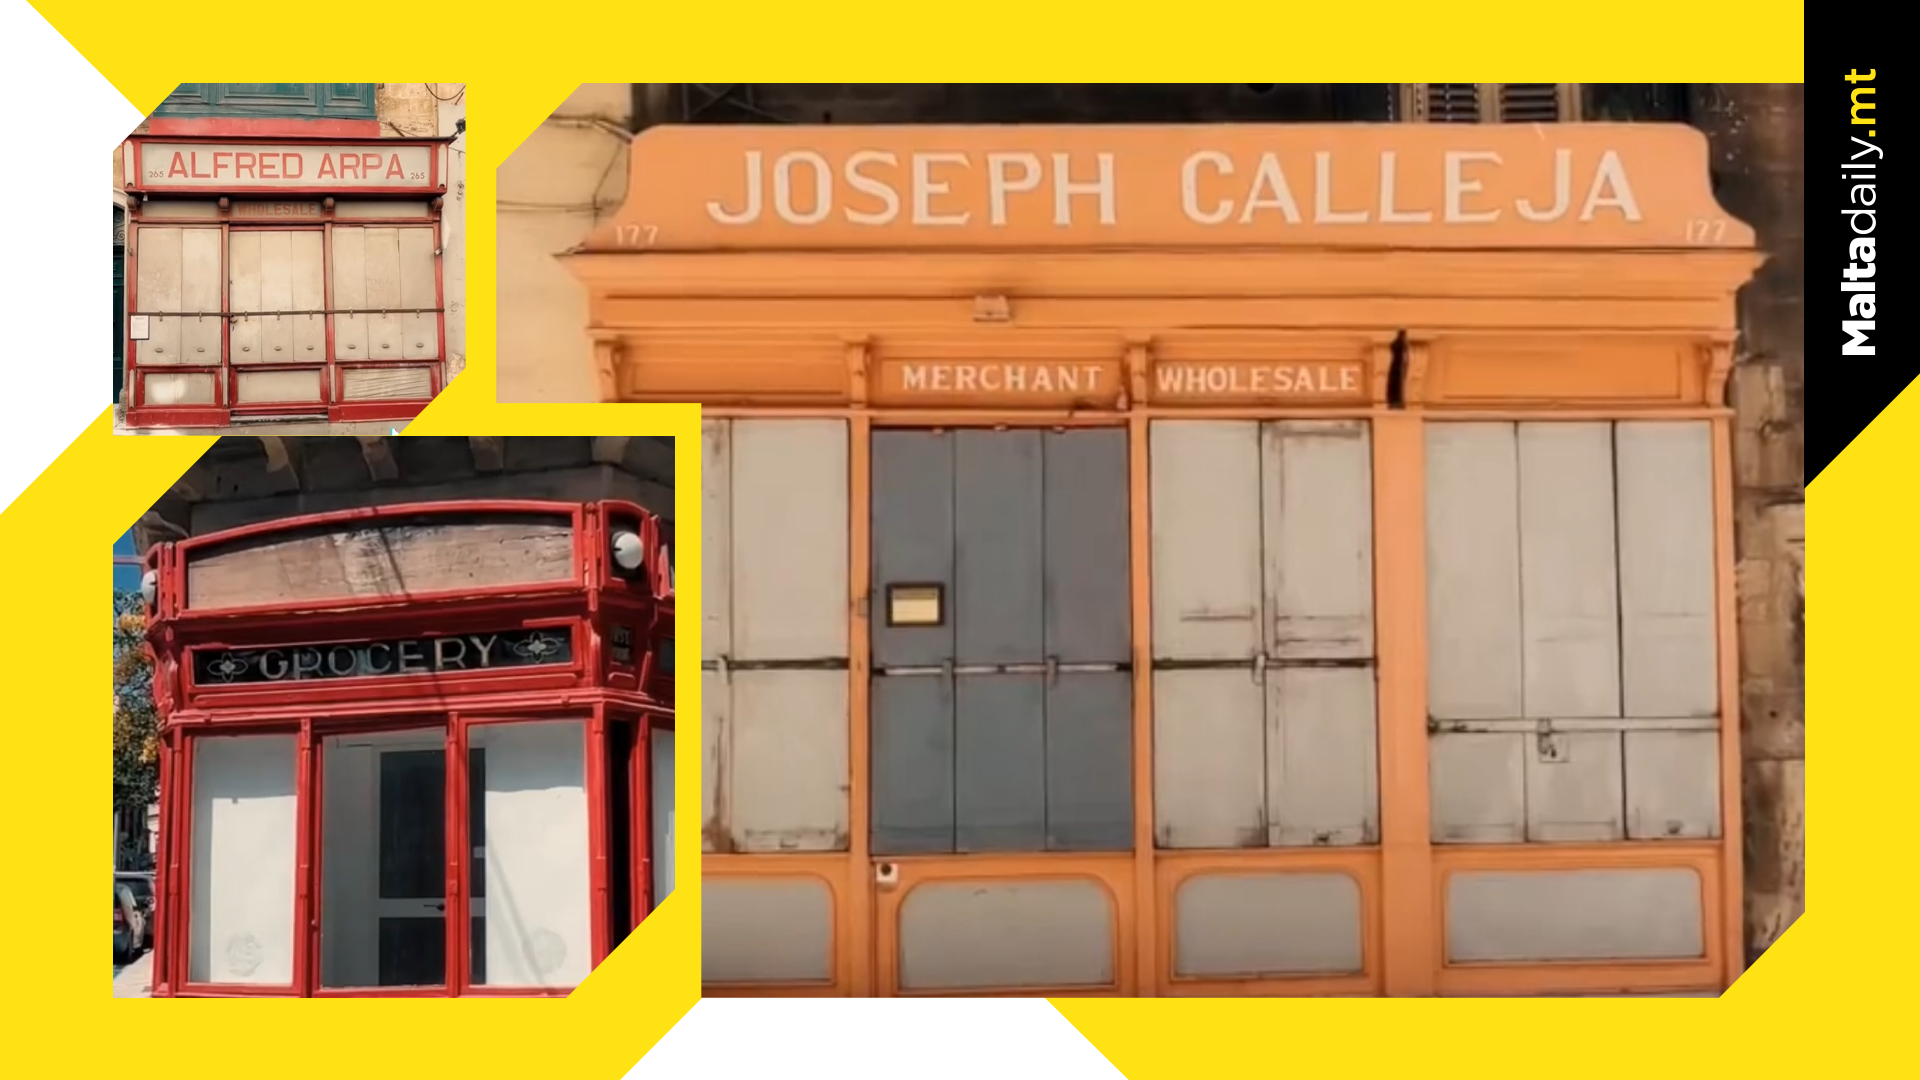 Content Creator Captures Iconic Maltese Shop facades